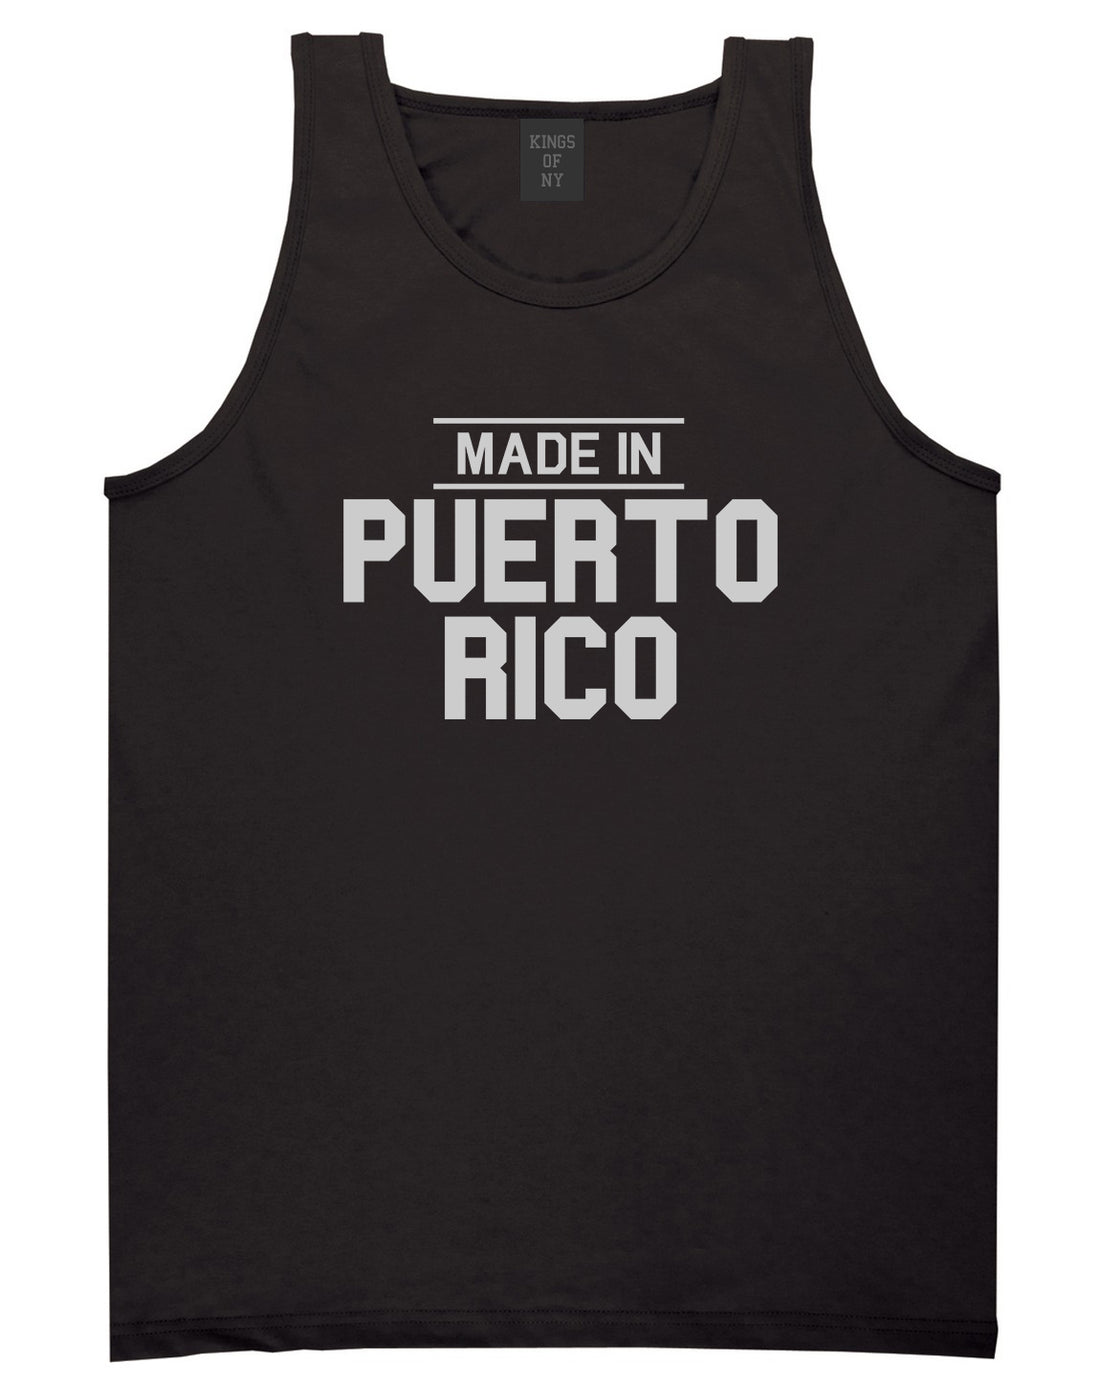 Made In Puerto Rico Mens Tank Top Shirt Black